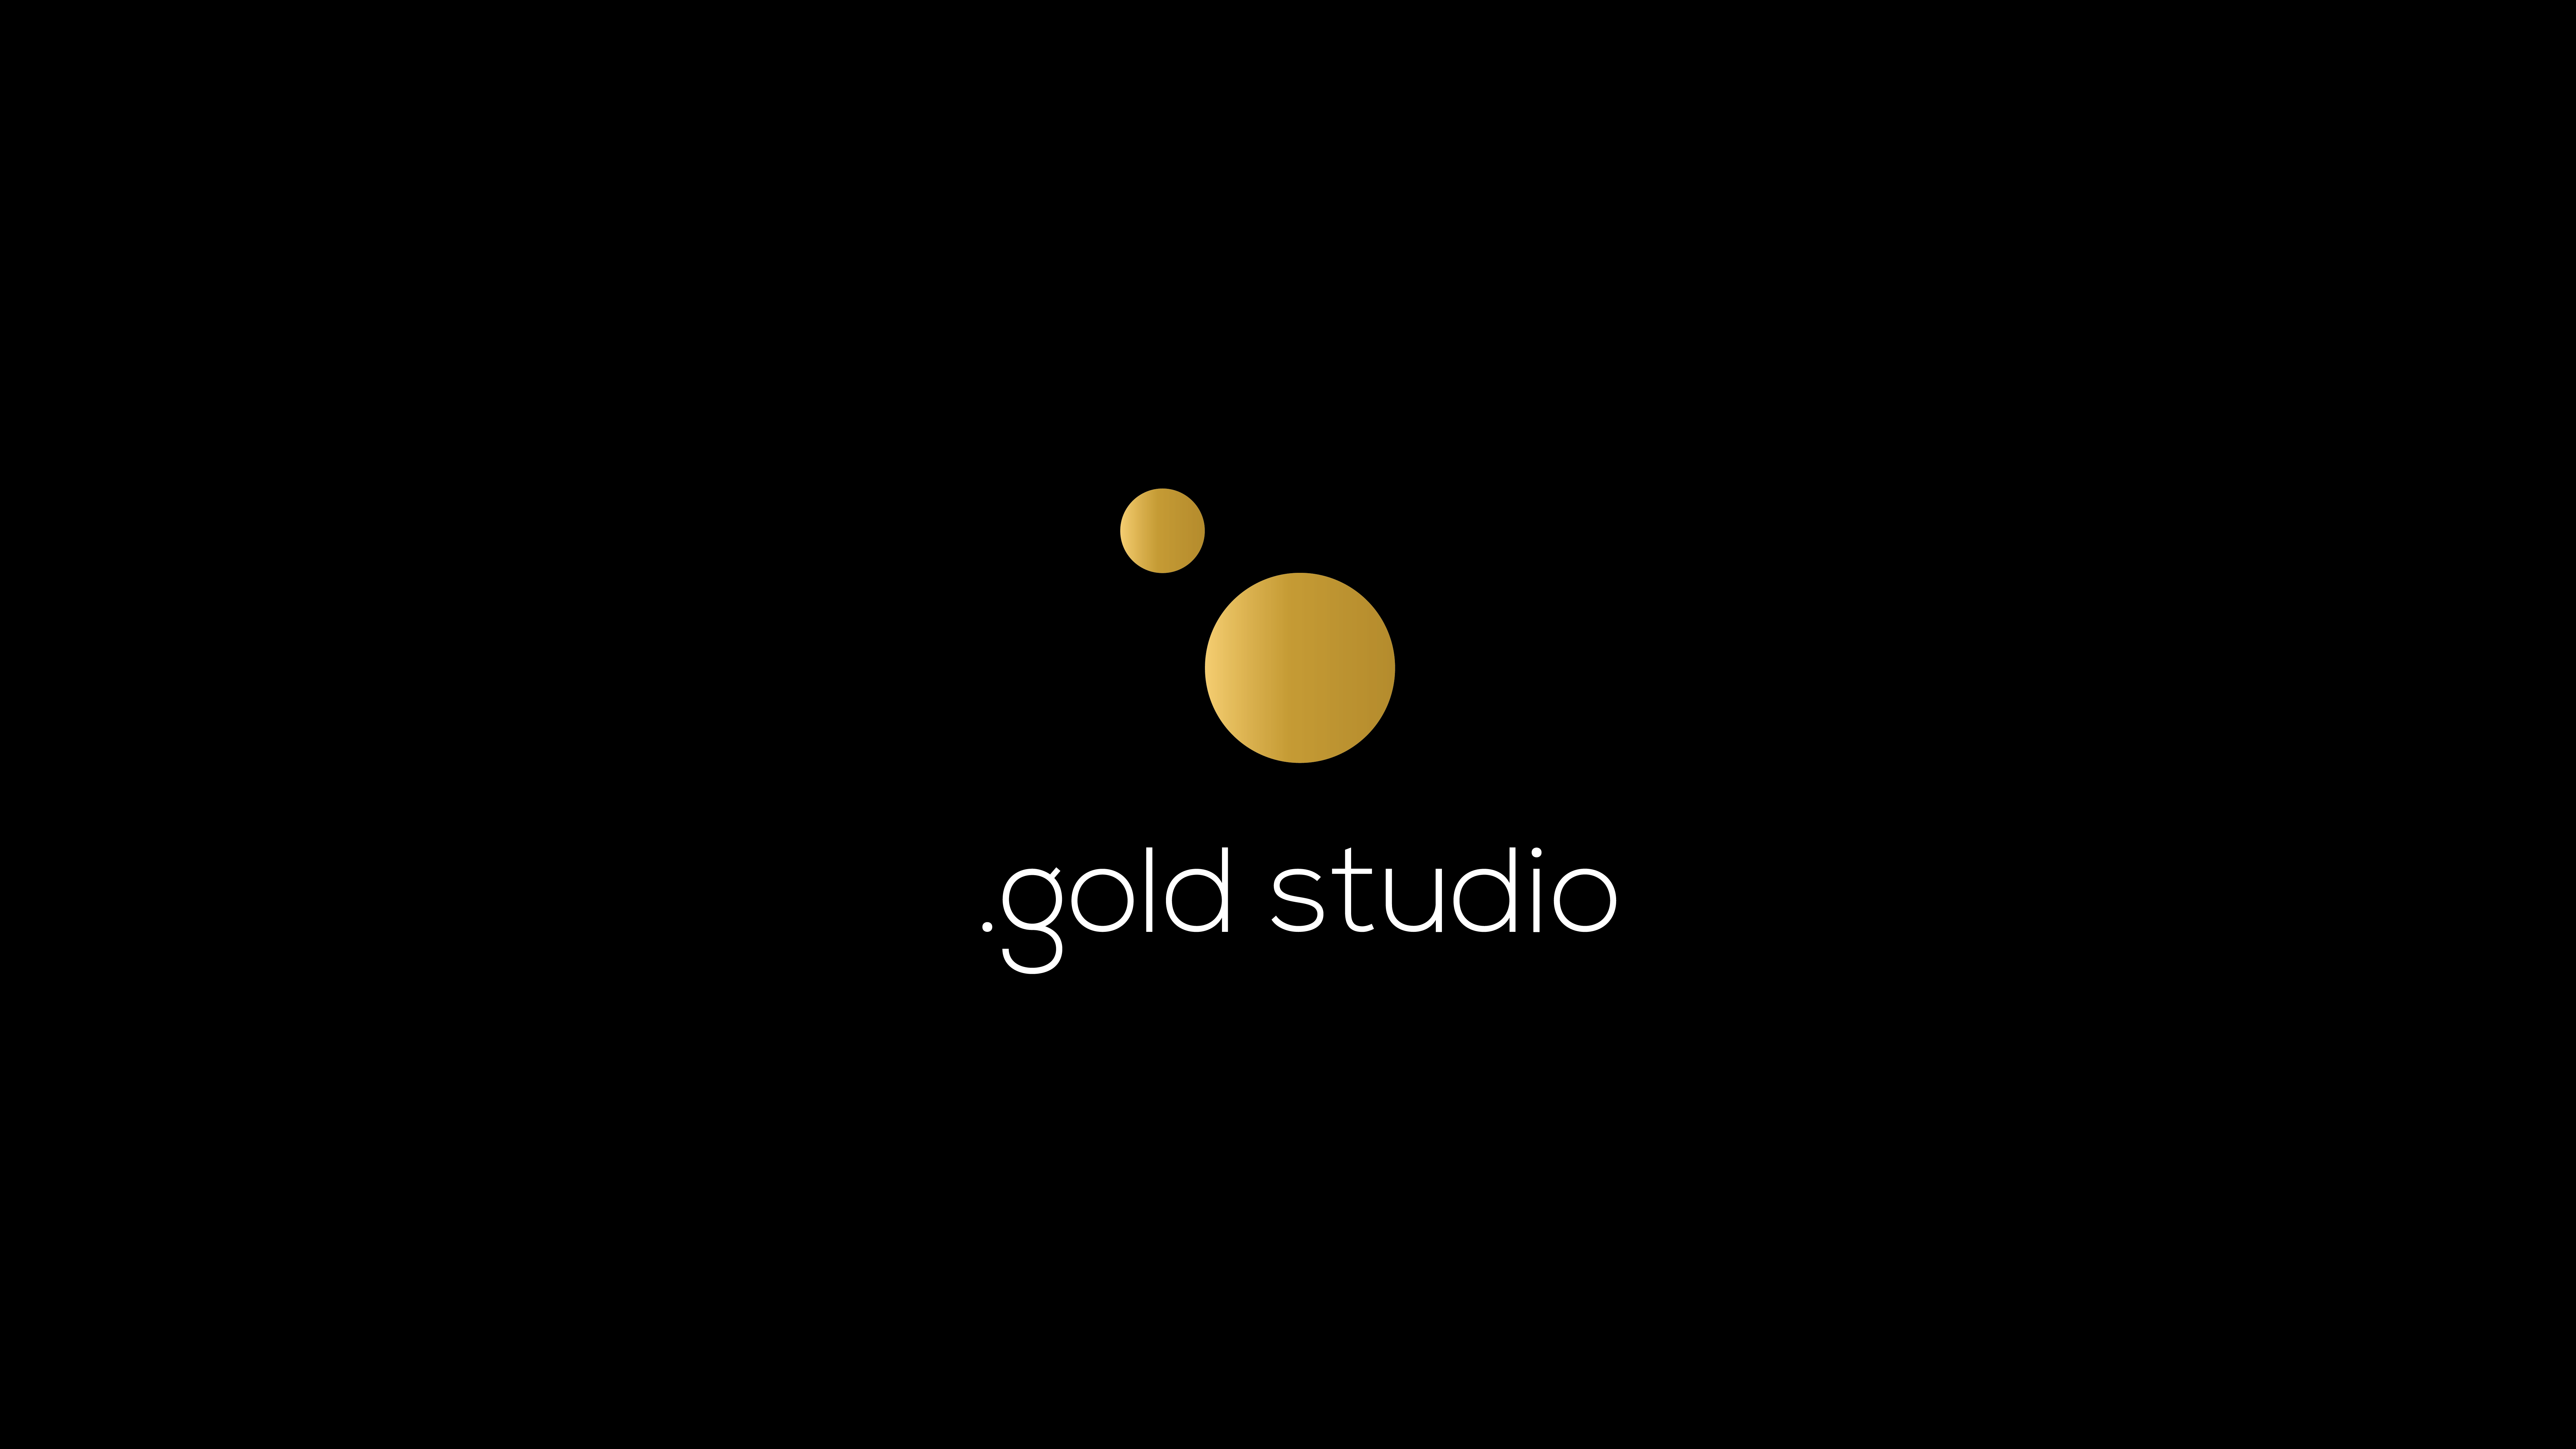 Logo - .gold studio